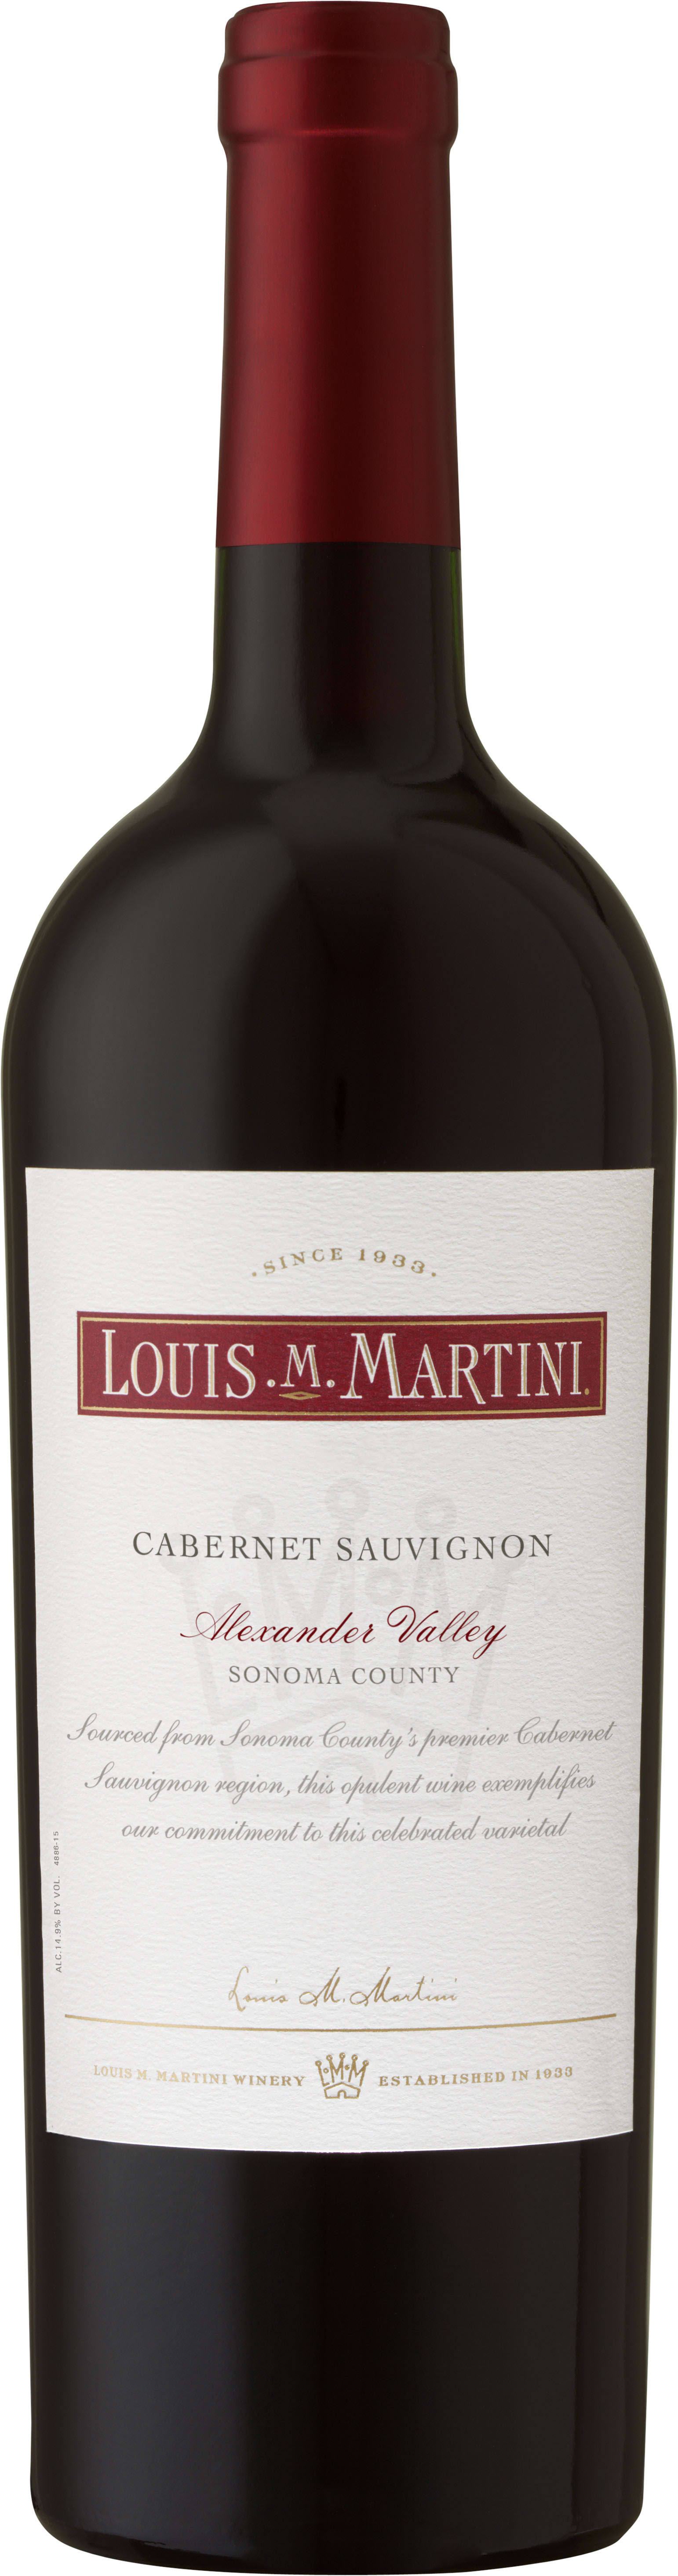 Louis M. Martini Cabernet Sauvignon, Alexander Valley, 2005 - 750 ml